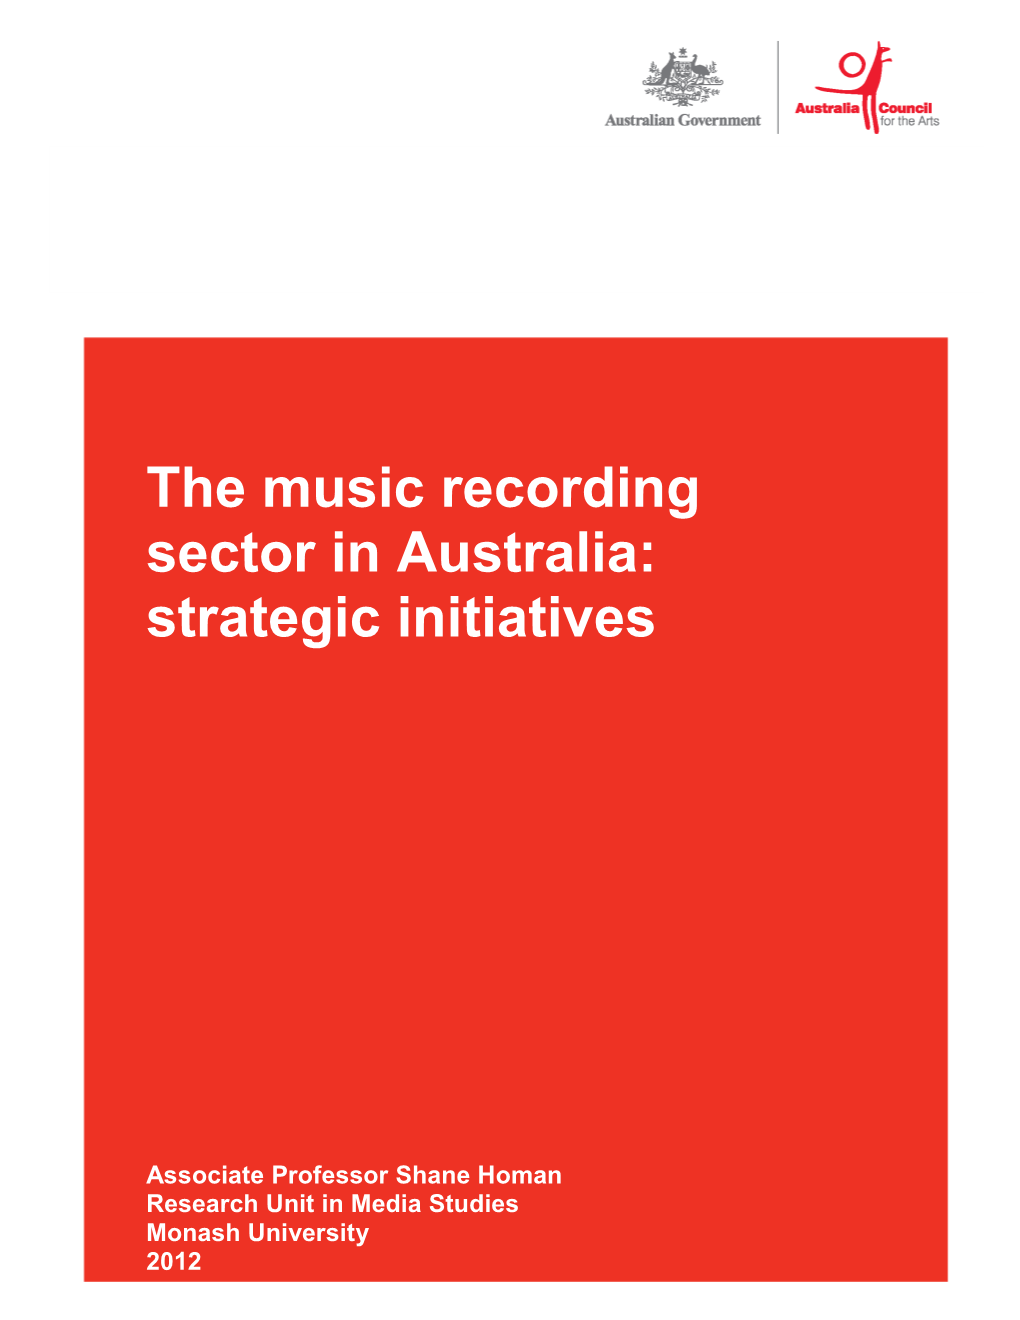 The Music Recording Sector in Australia: Strategic Initiatives